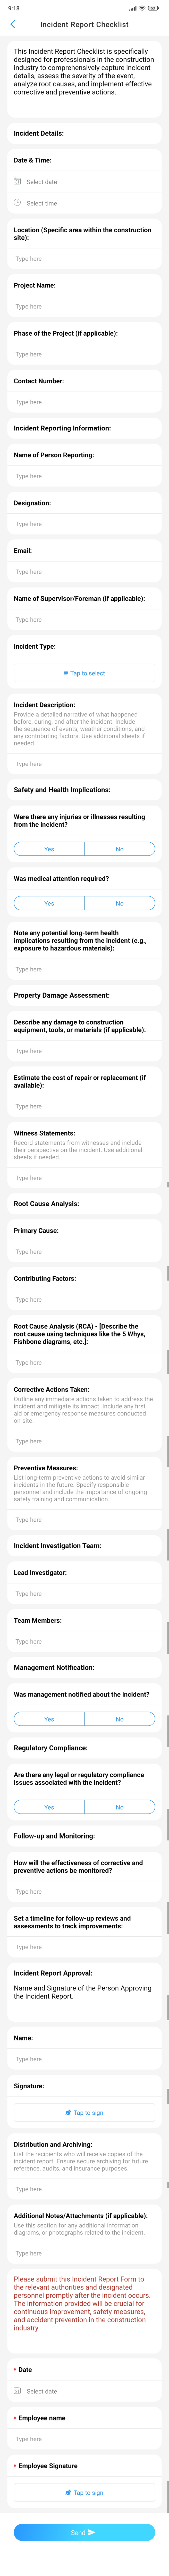 Incident Report Checklist screenshot